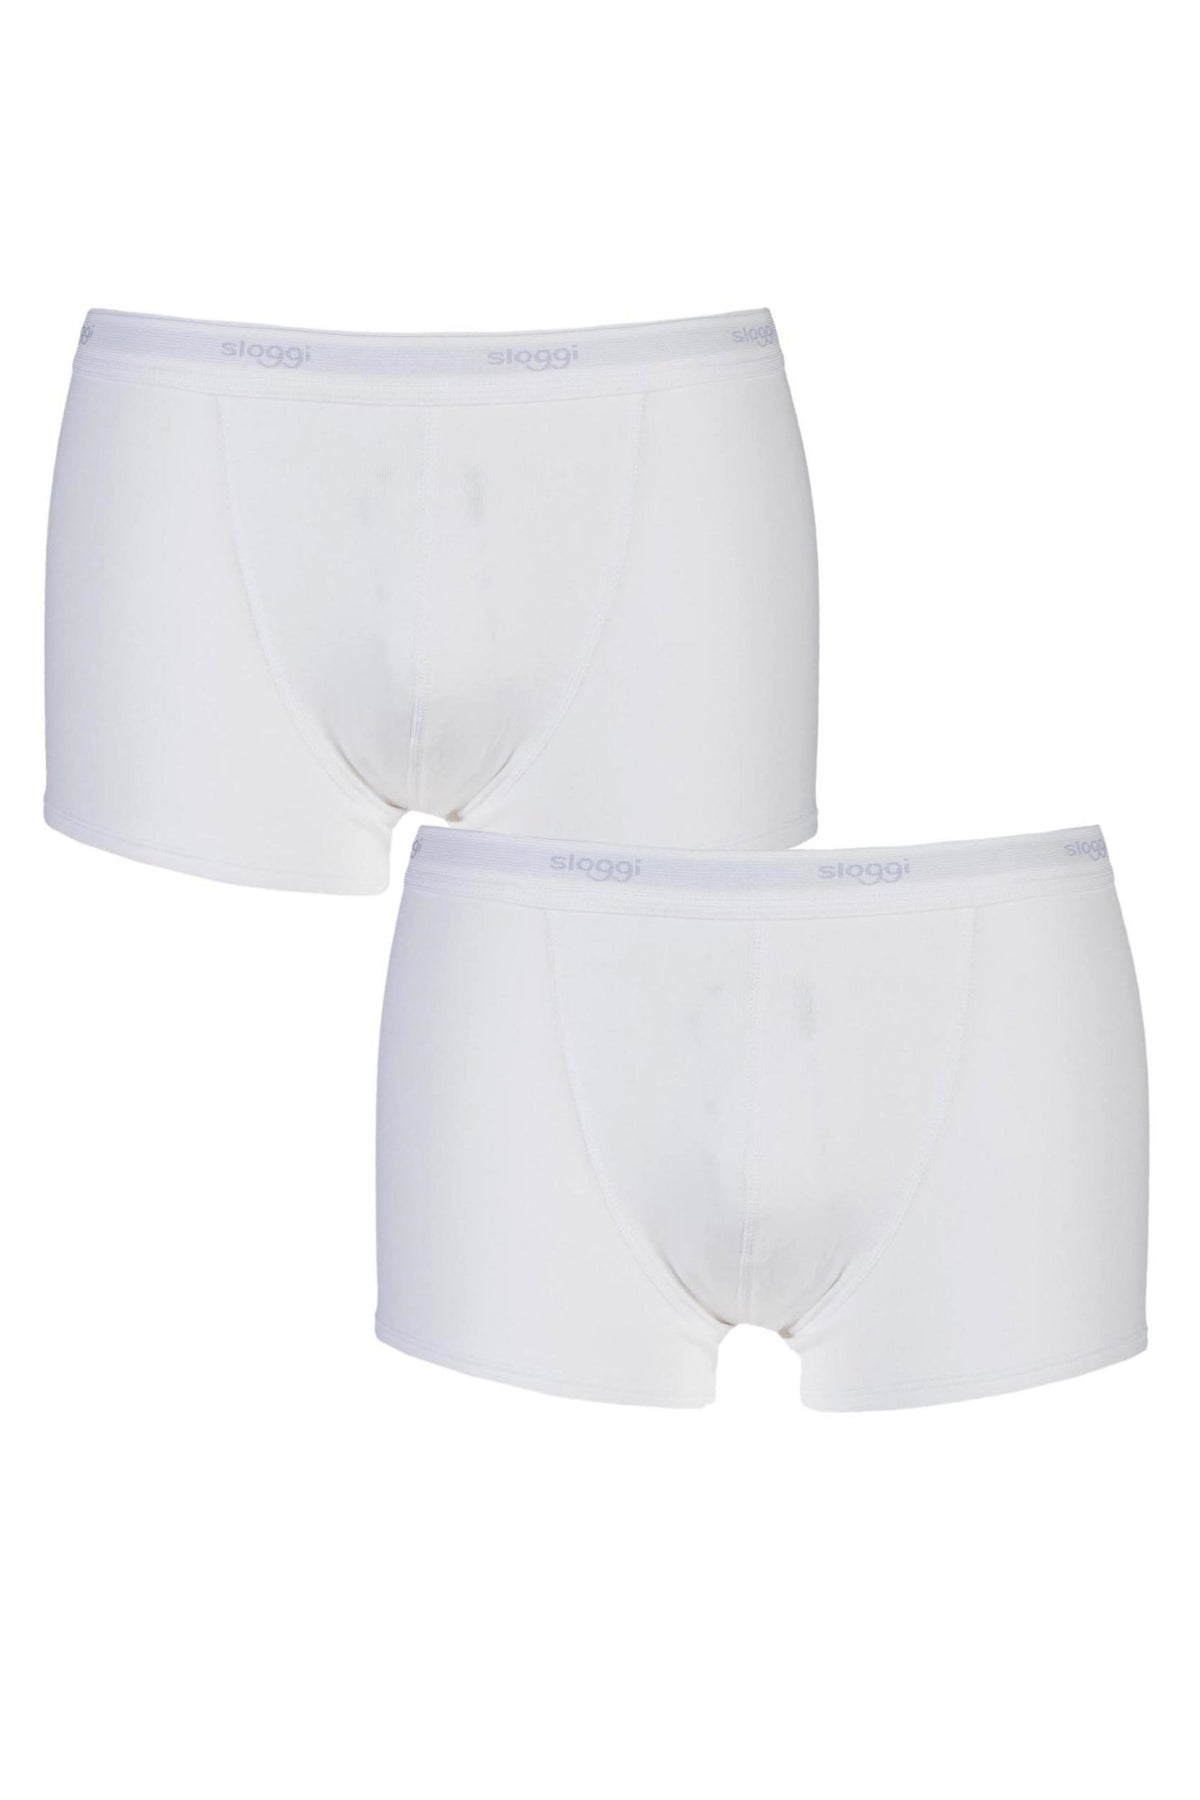 Sloggi Men&#39;s Basic Short Boxer Shorts Briefs Pants 2 Pack 10020415 White 